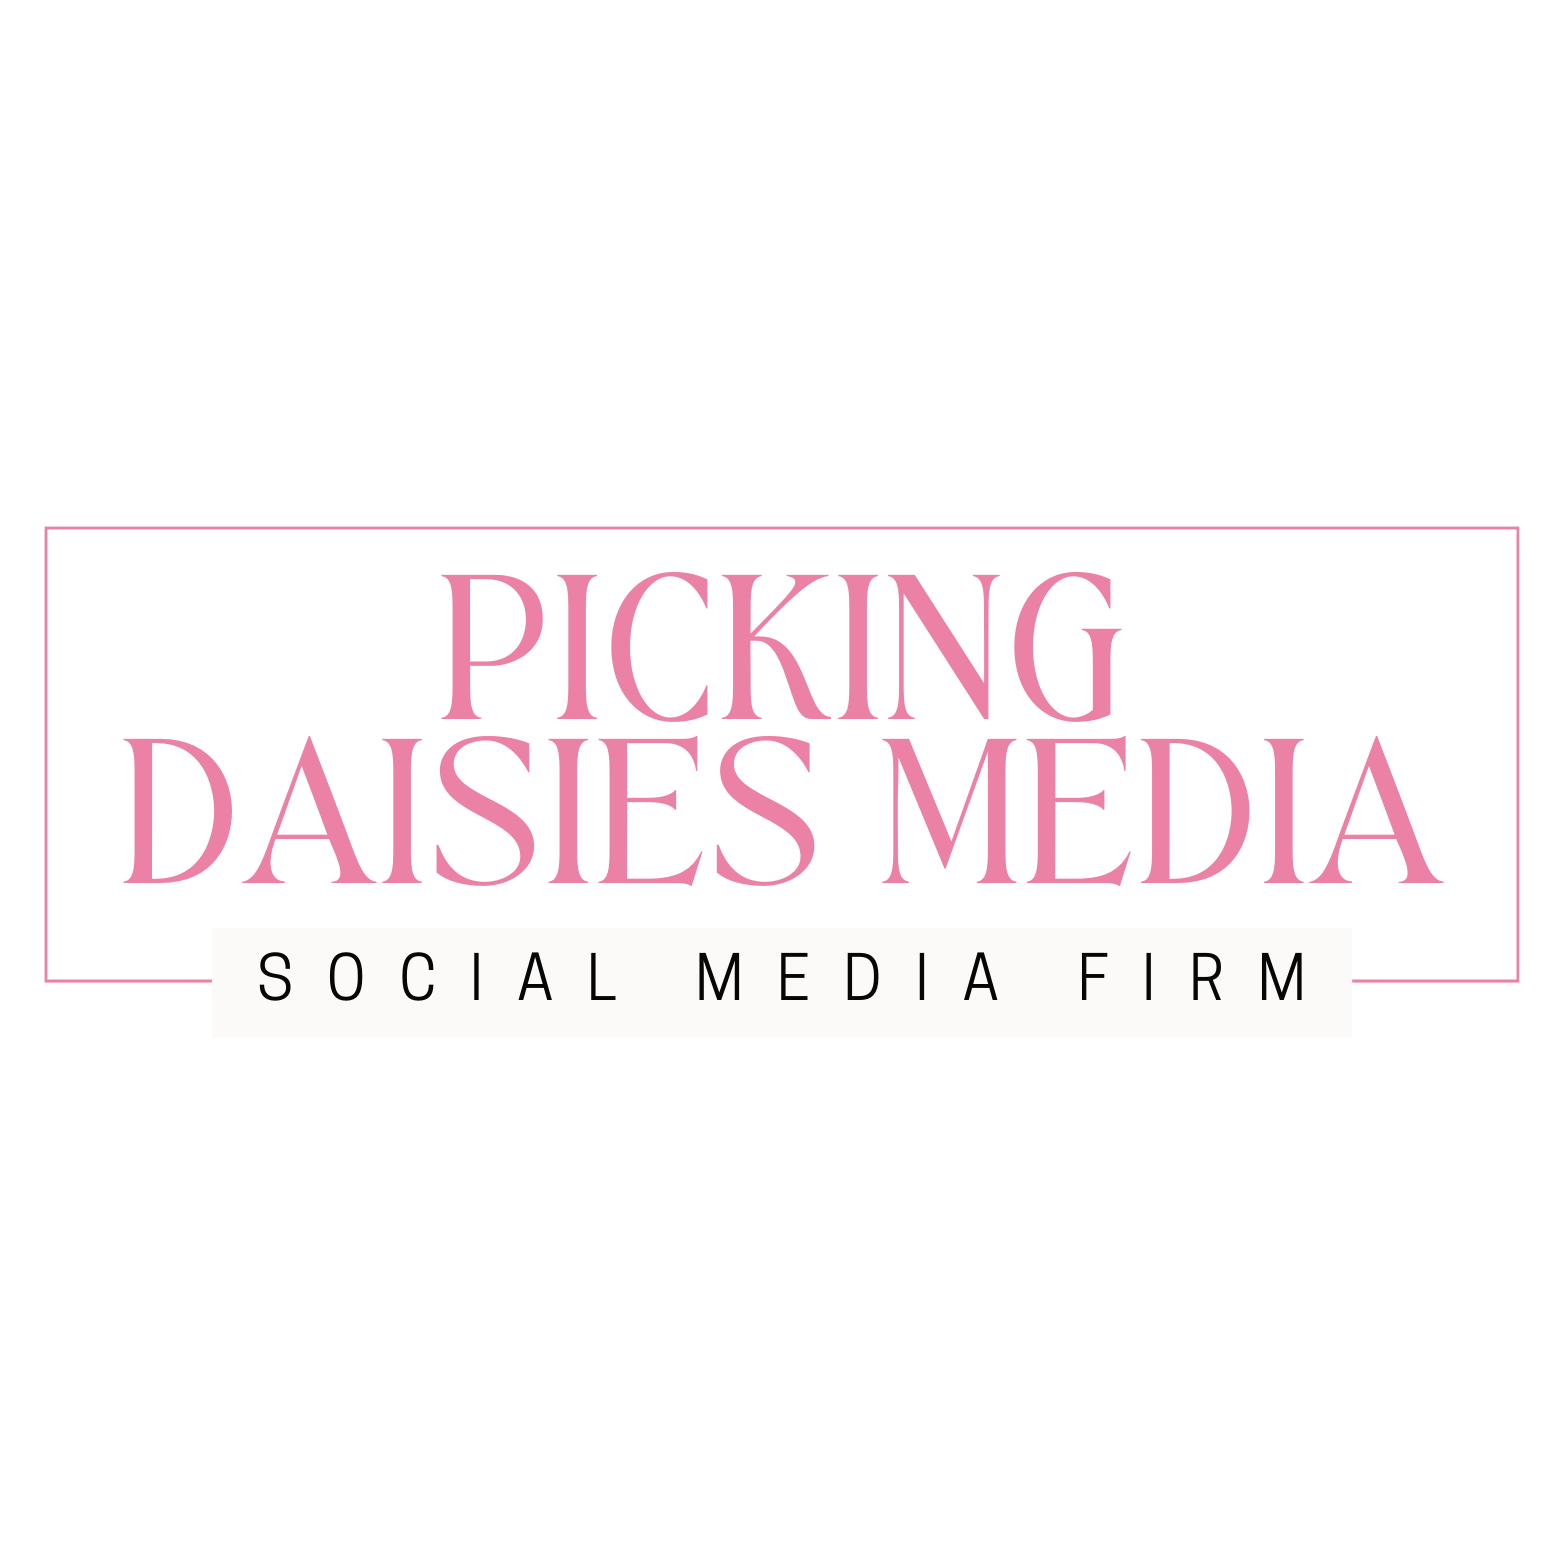 Picking Daisies Media Social Media Firm